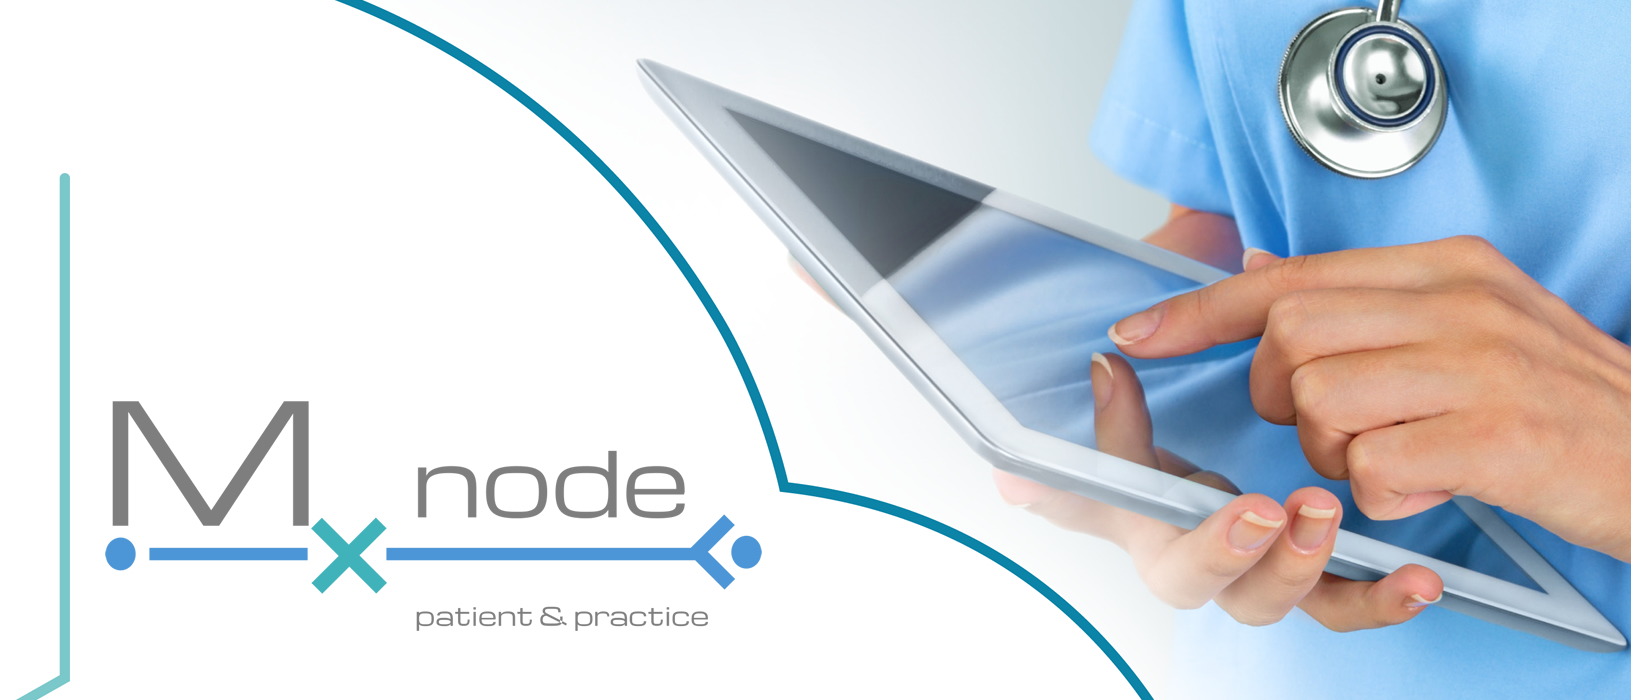 Mx Node - patient & practice